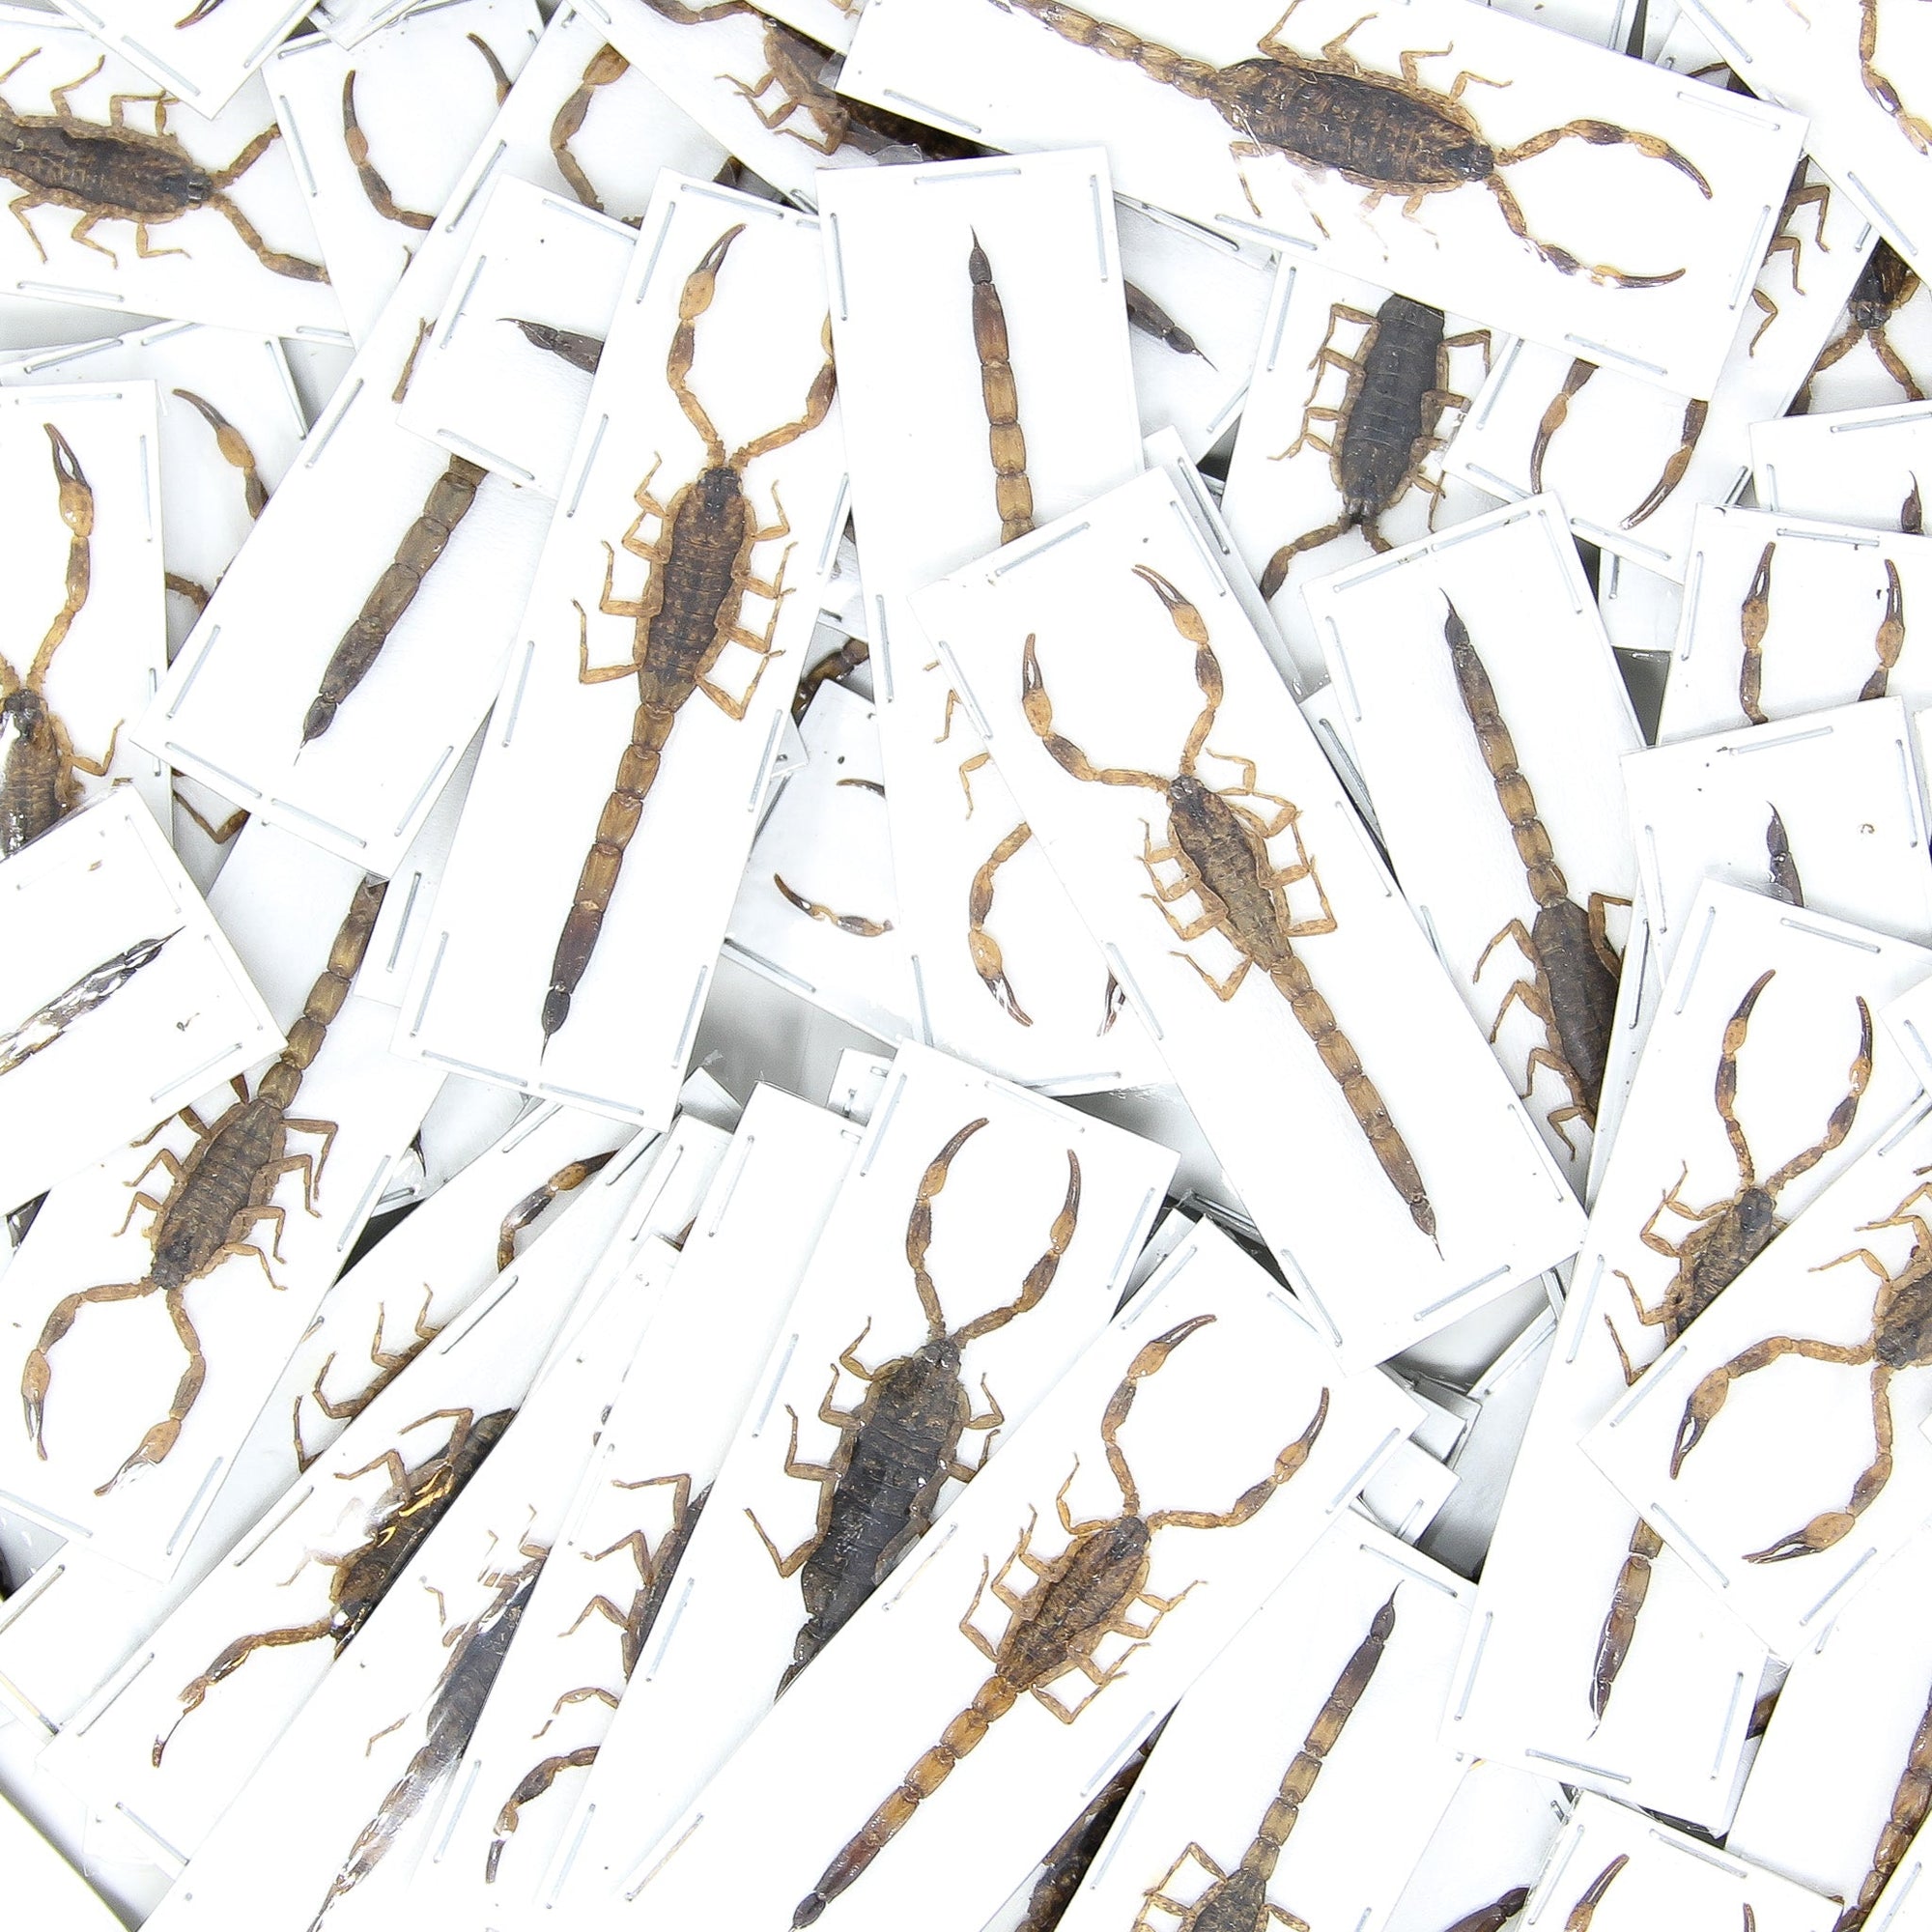 WHOLESALE 10 Java Scorpions (Mesobuthus martensii) +/- 60mm A1 Entomology Specimens